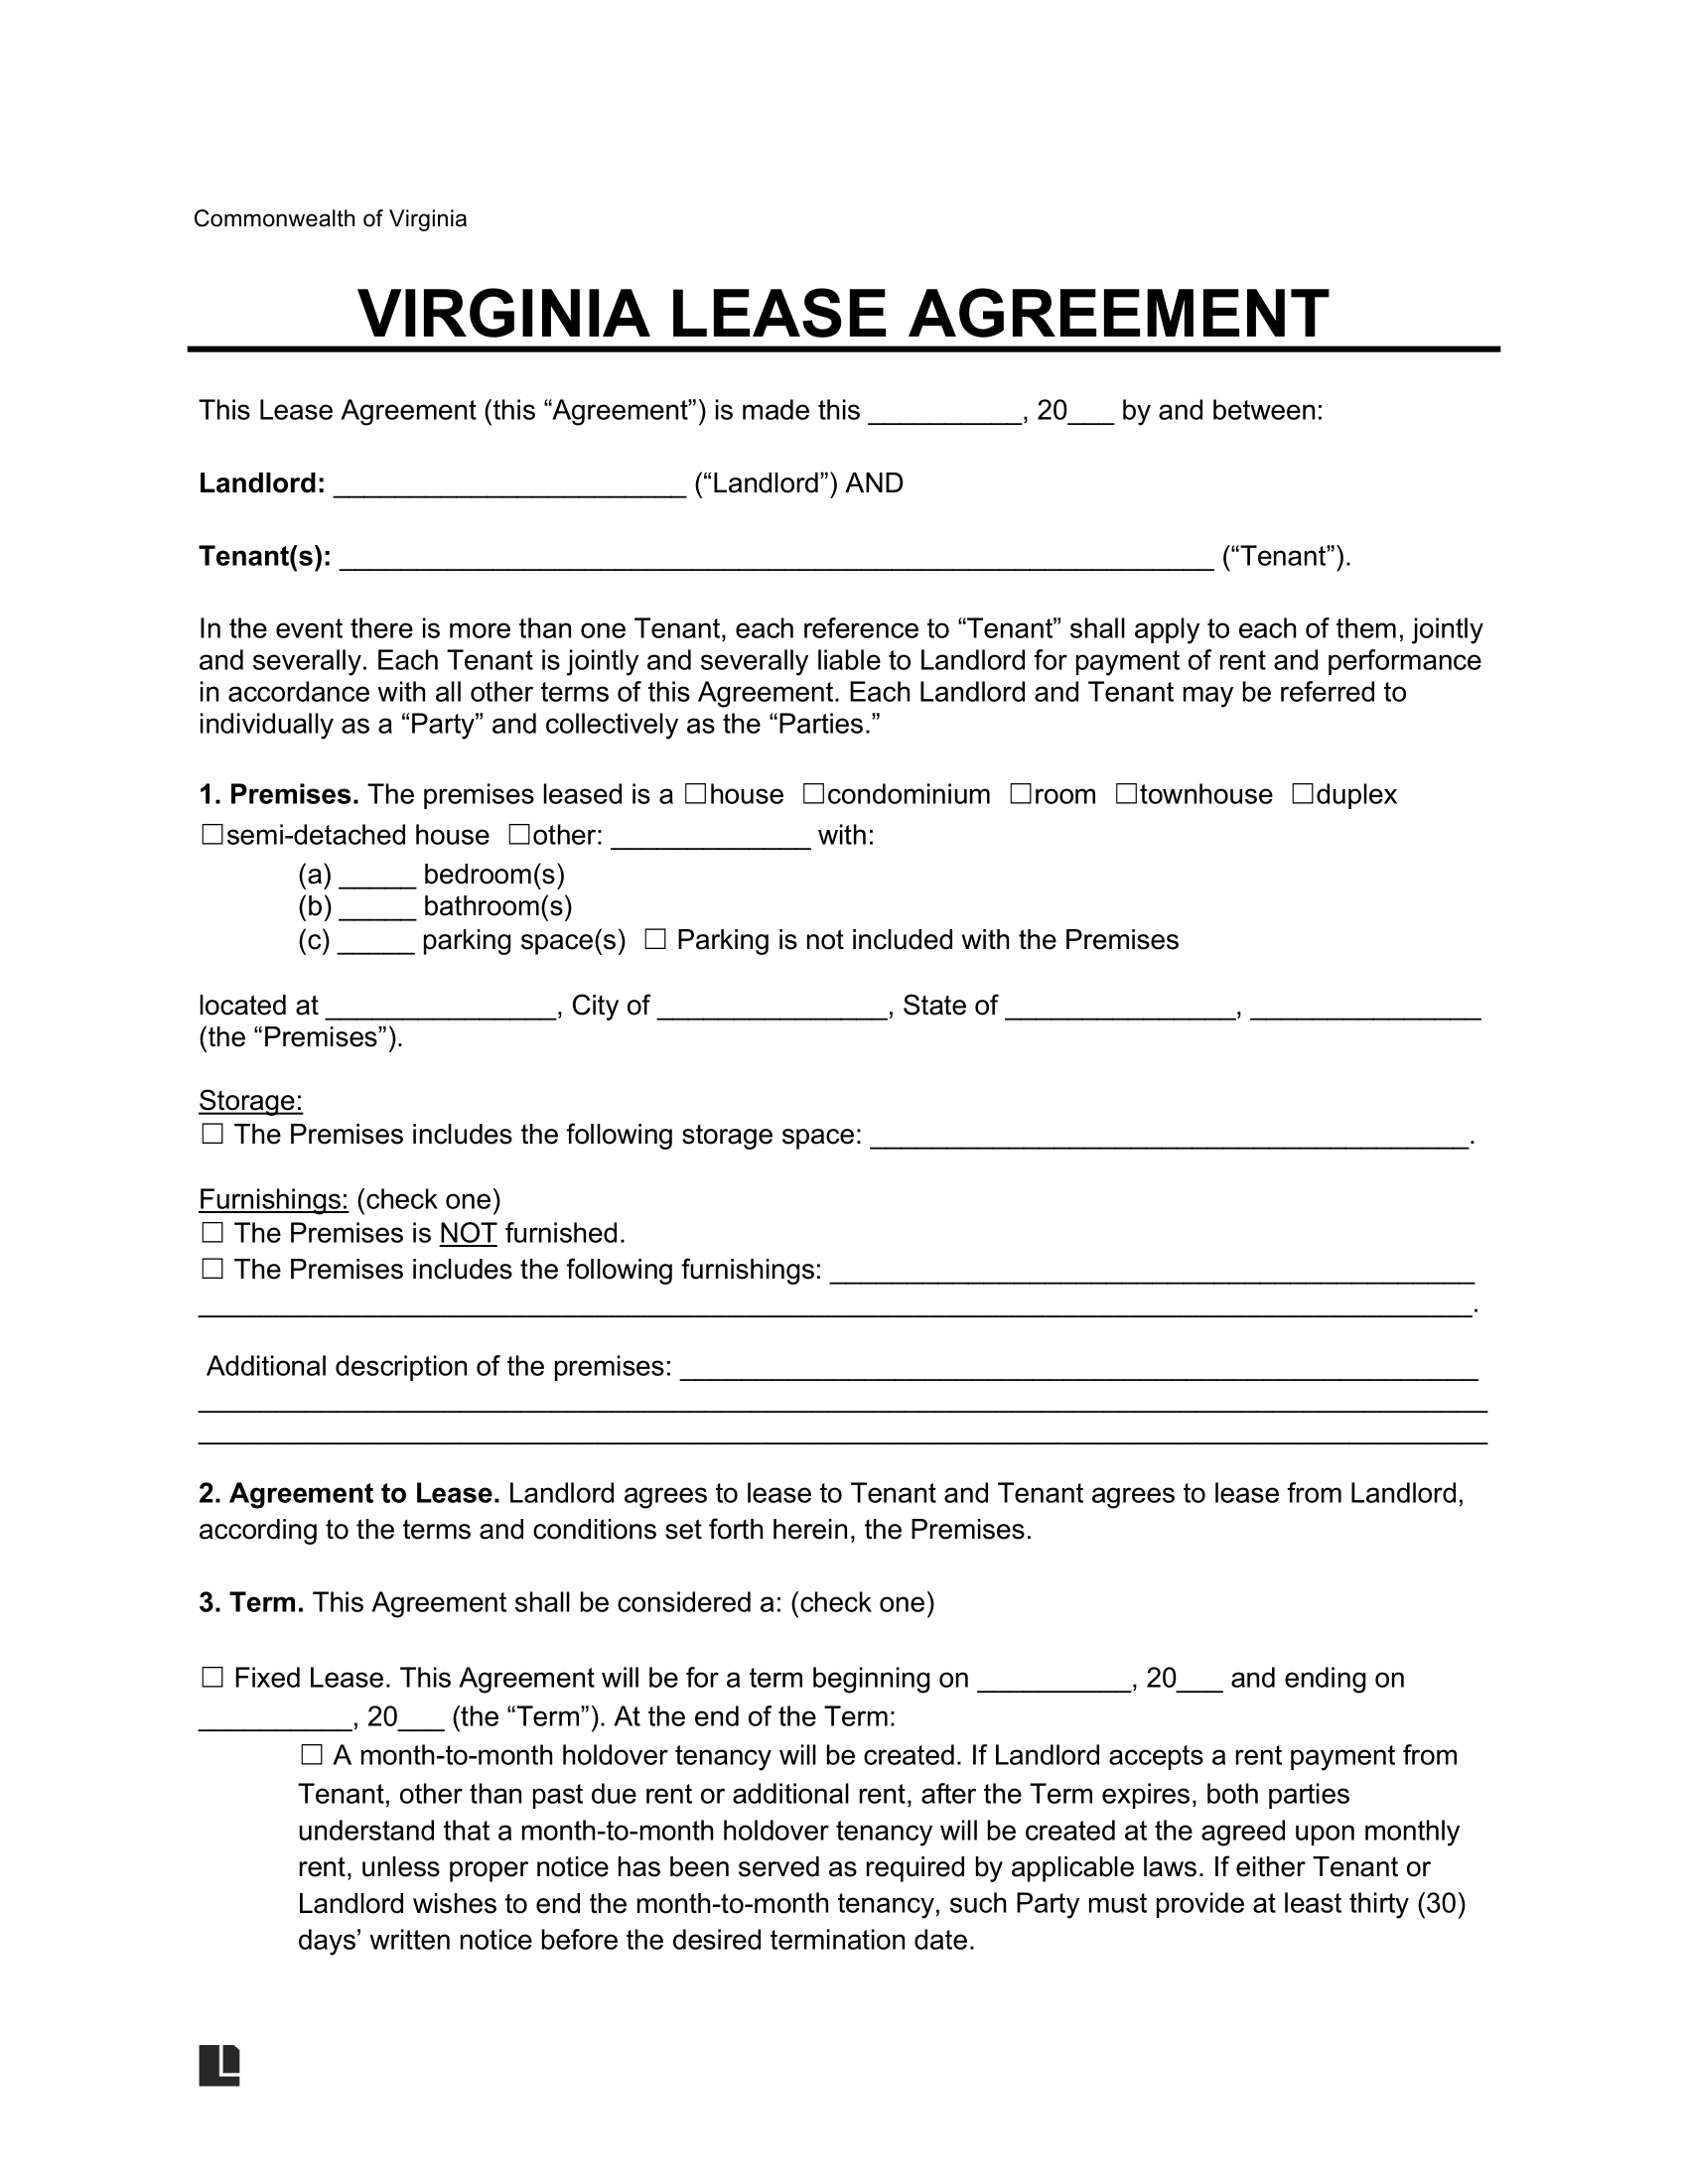 Virginia Standard Residential Lease Agreement